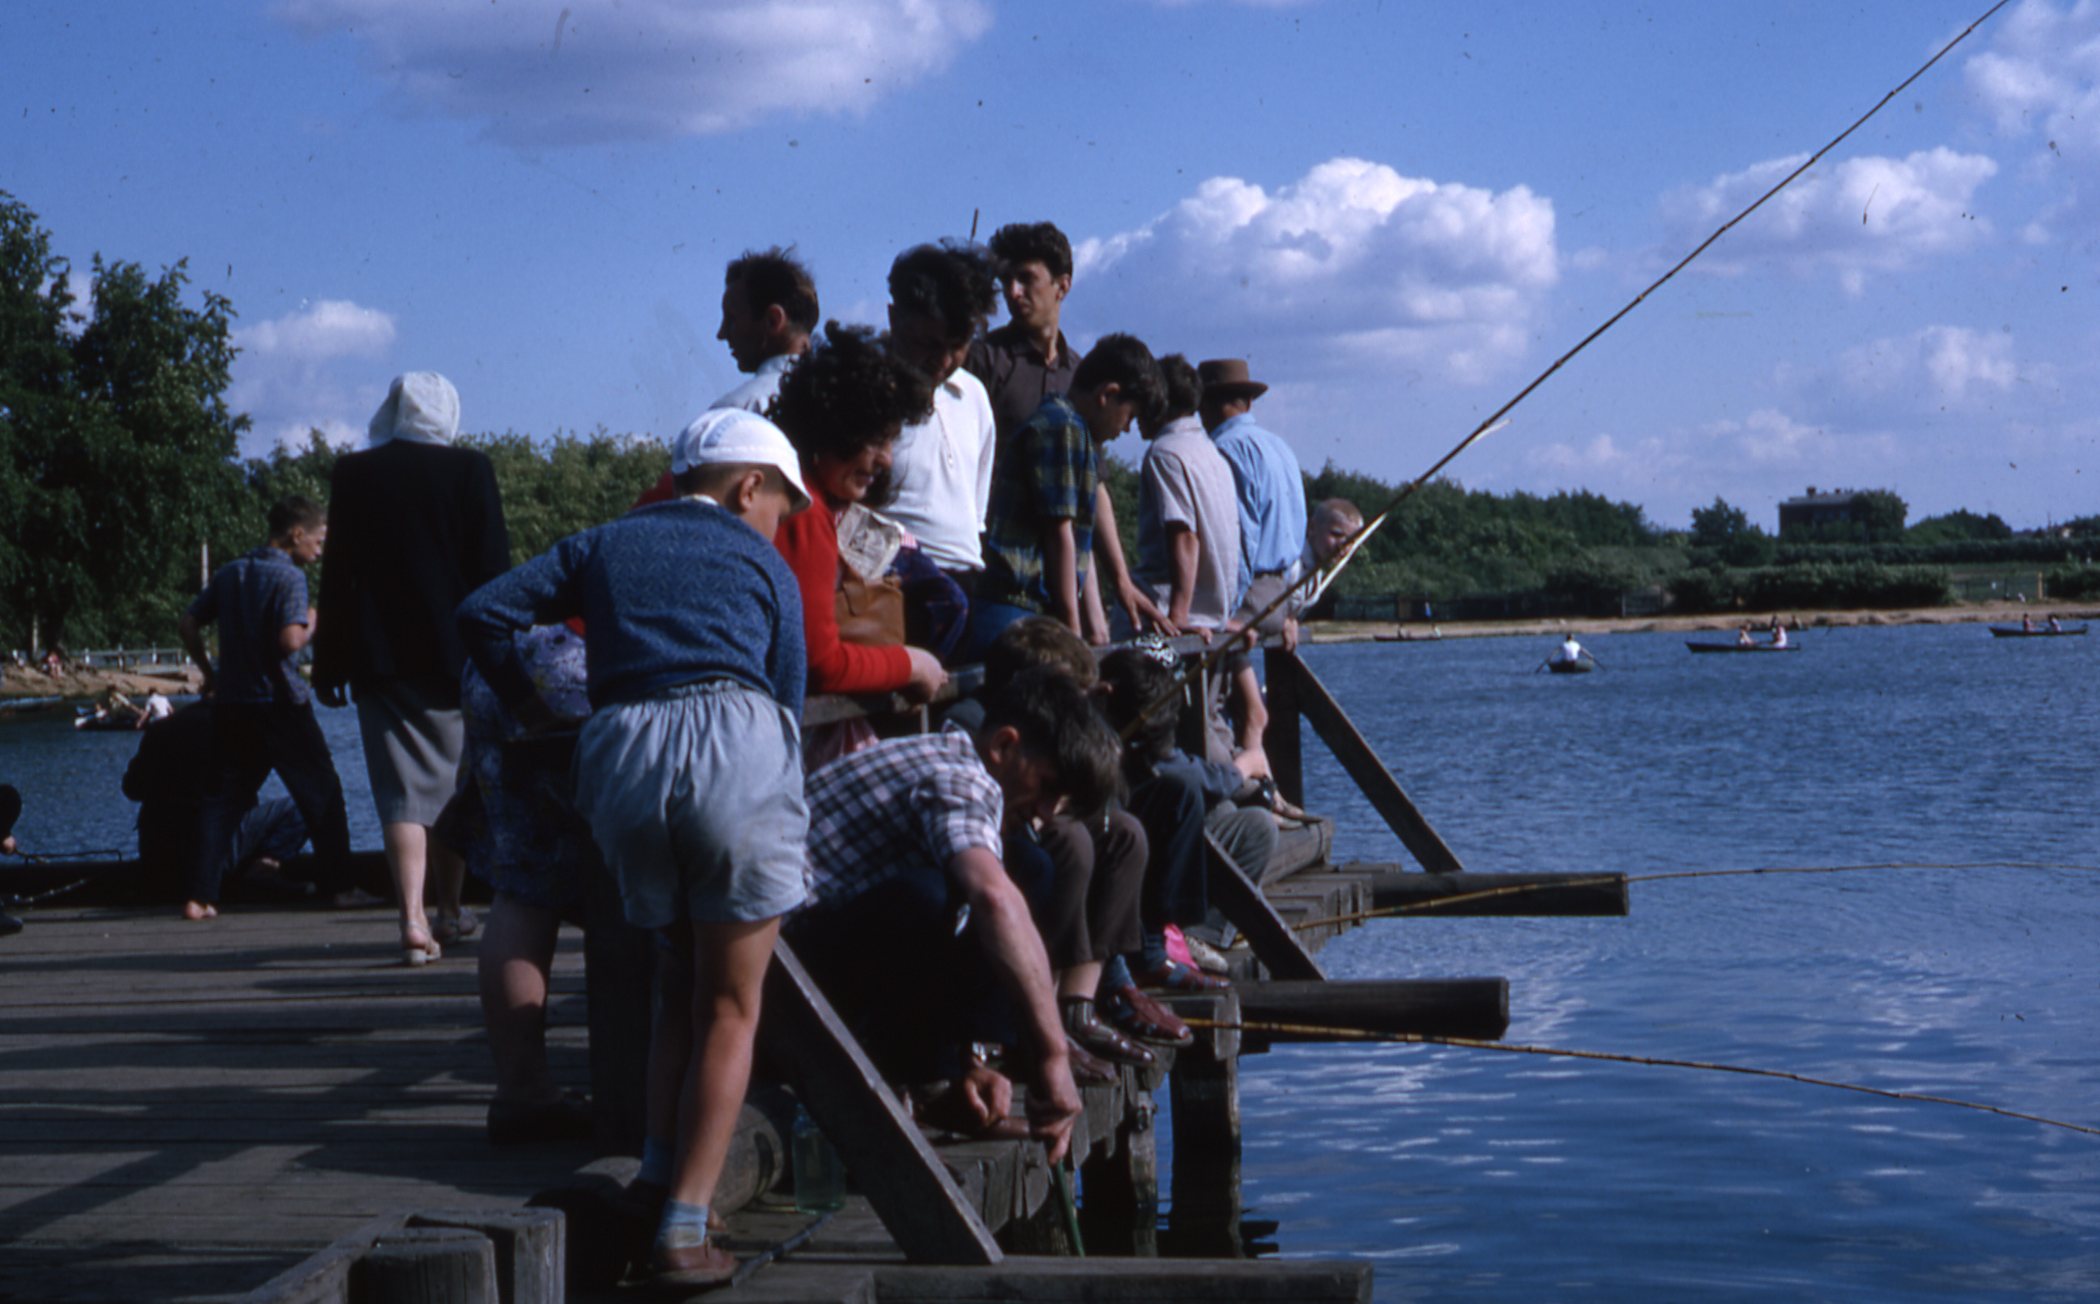 MA10 Ostankino people sunbathing and fishing © Thomas T. Hammond / University of Virginia